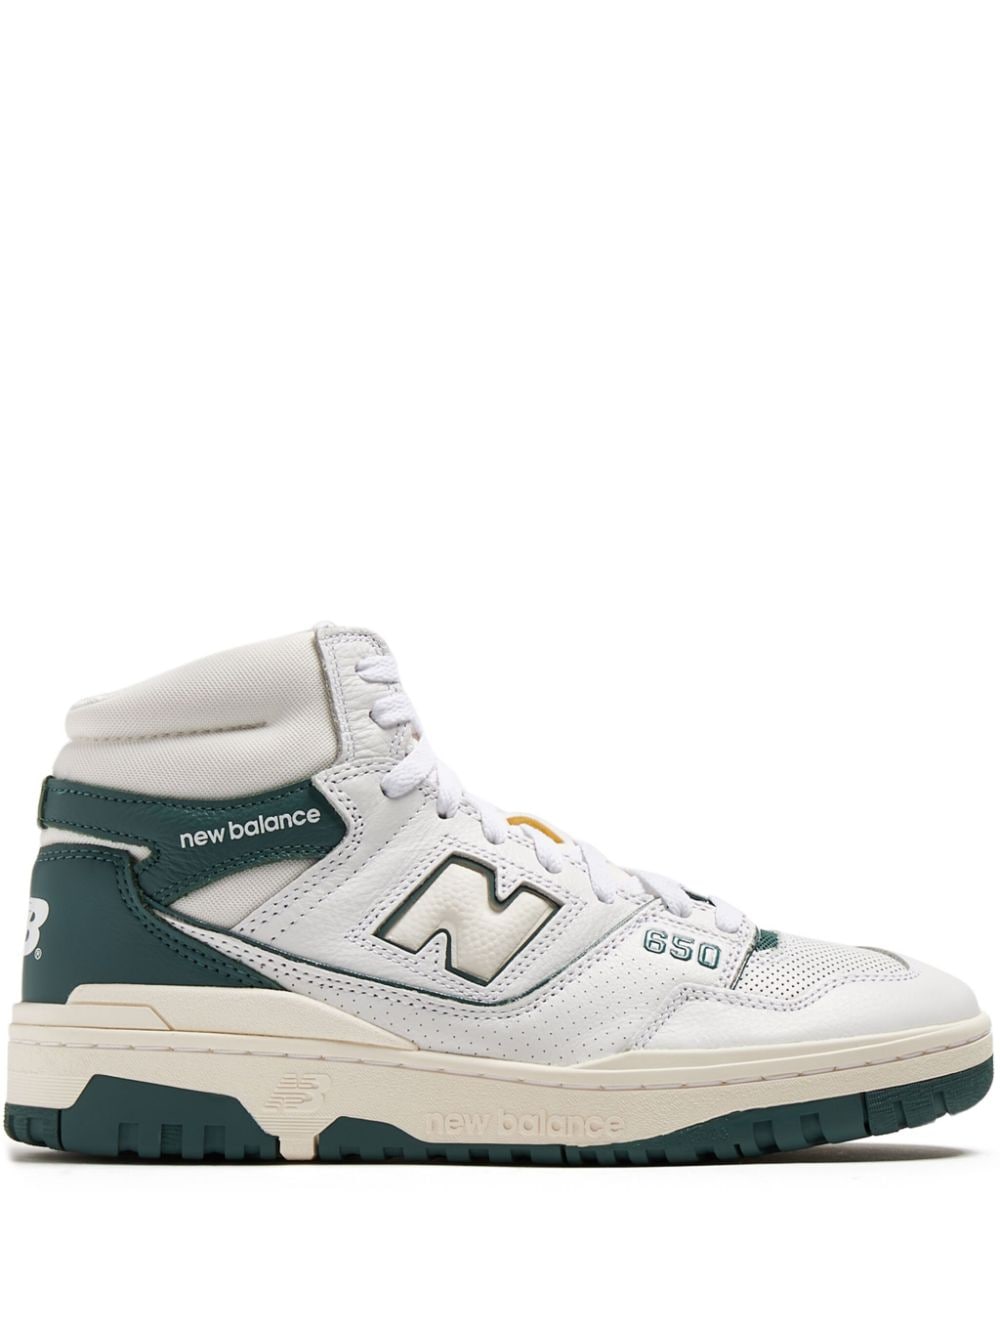 New Balance 650 high-top sneakers - White von New Balance